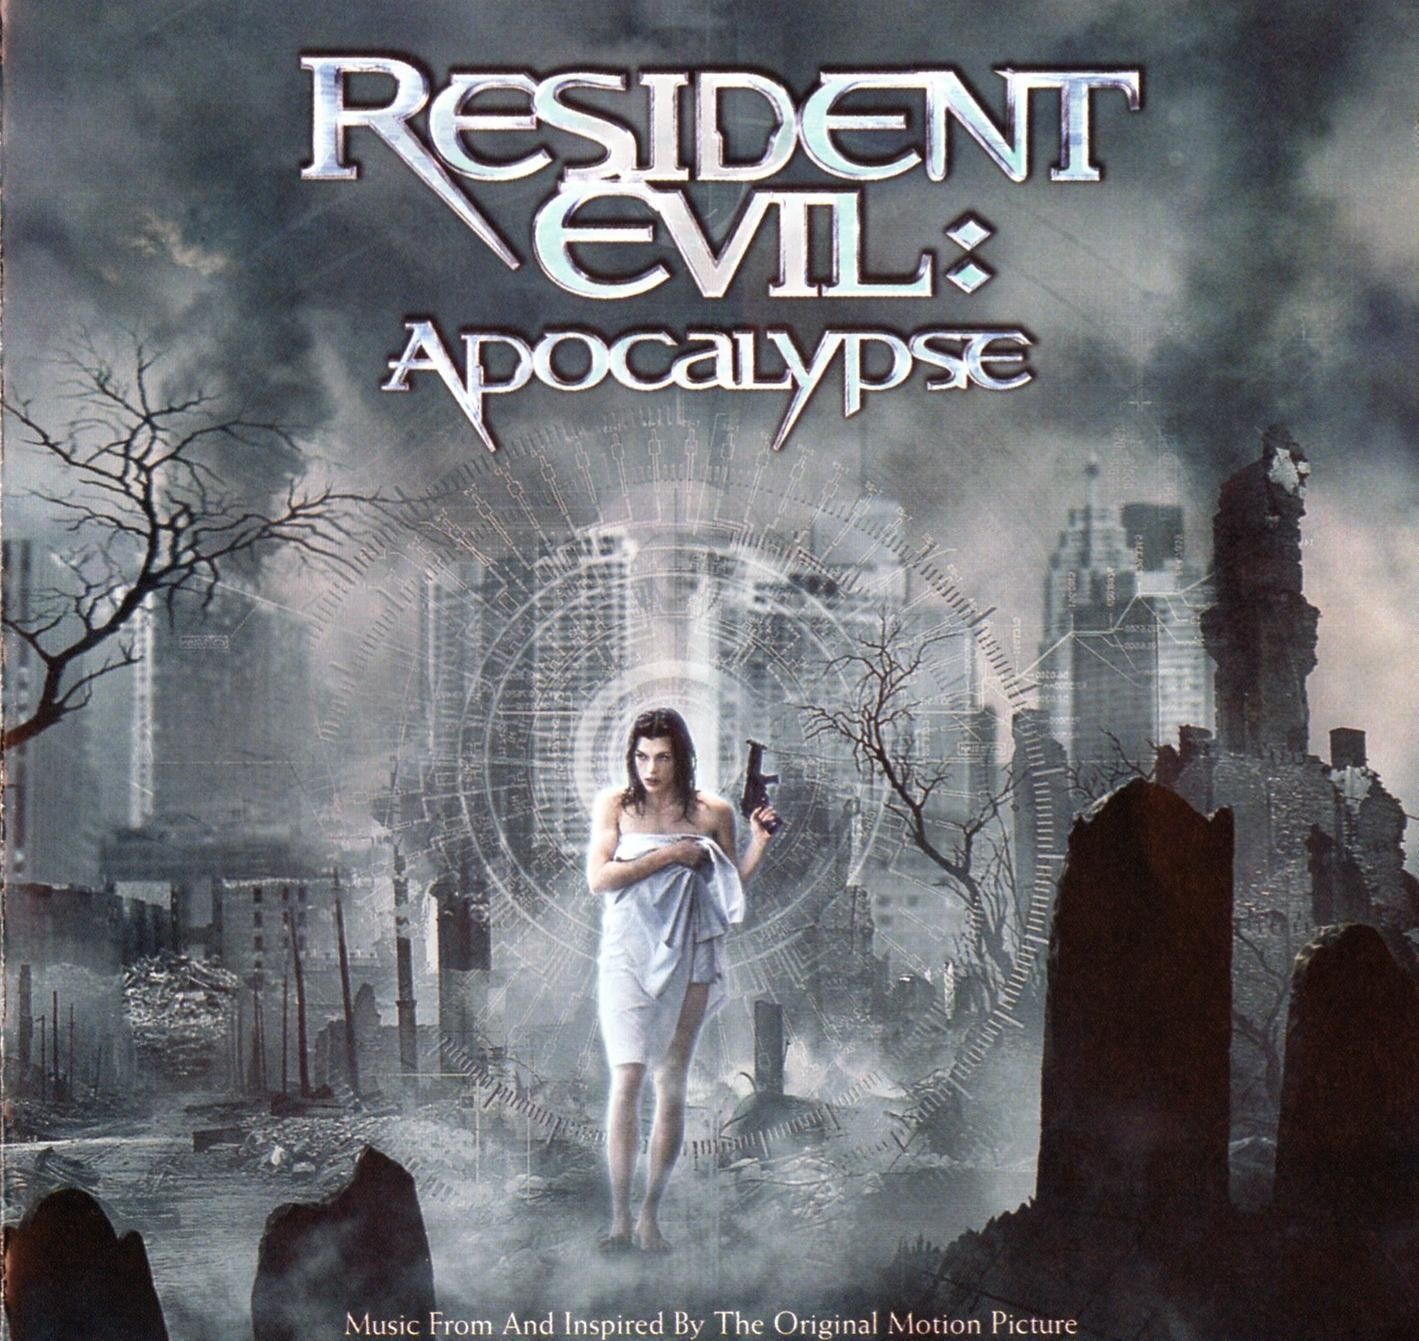 Stream Resident Evil : The Final Chapter [Trailer Soundtrack] Gun 'n Roses  Paradise City Remix by DJFirstzazaChannel